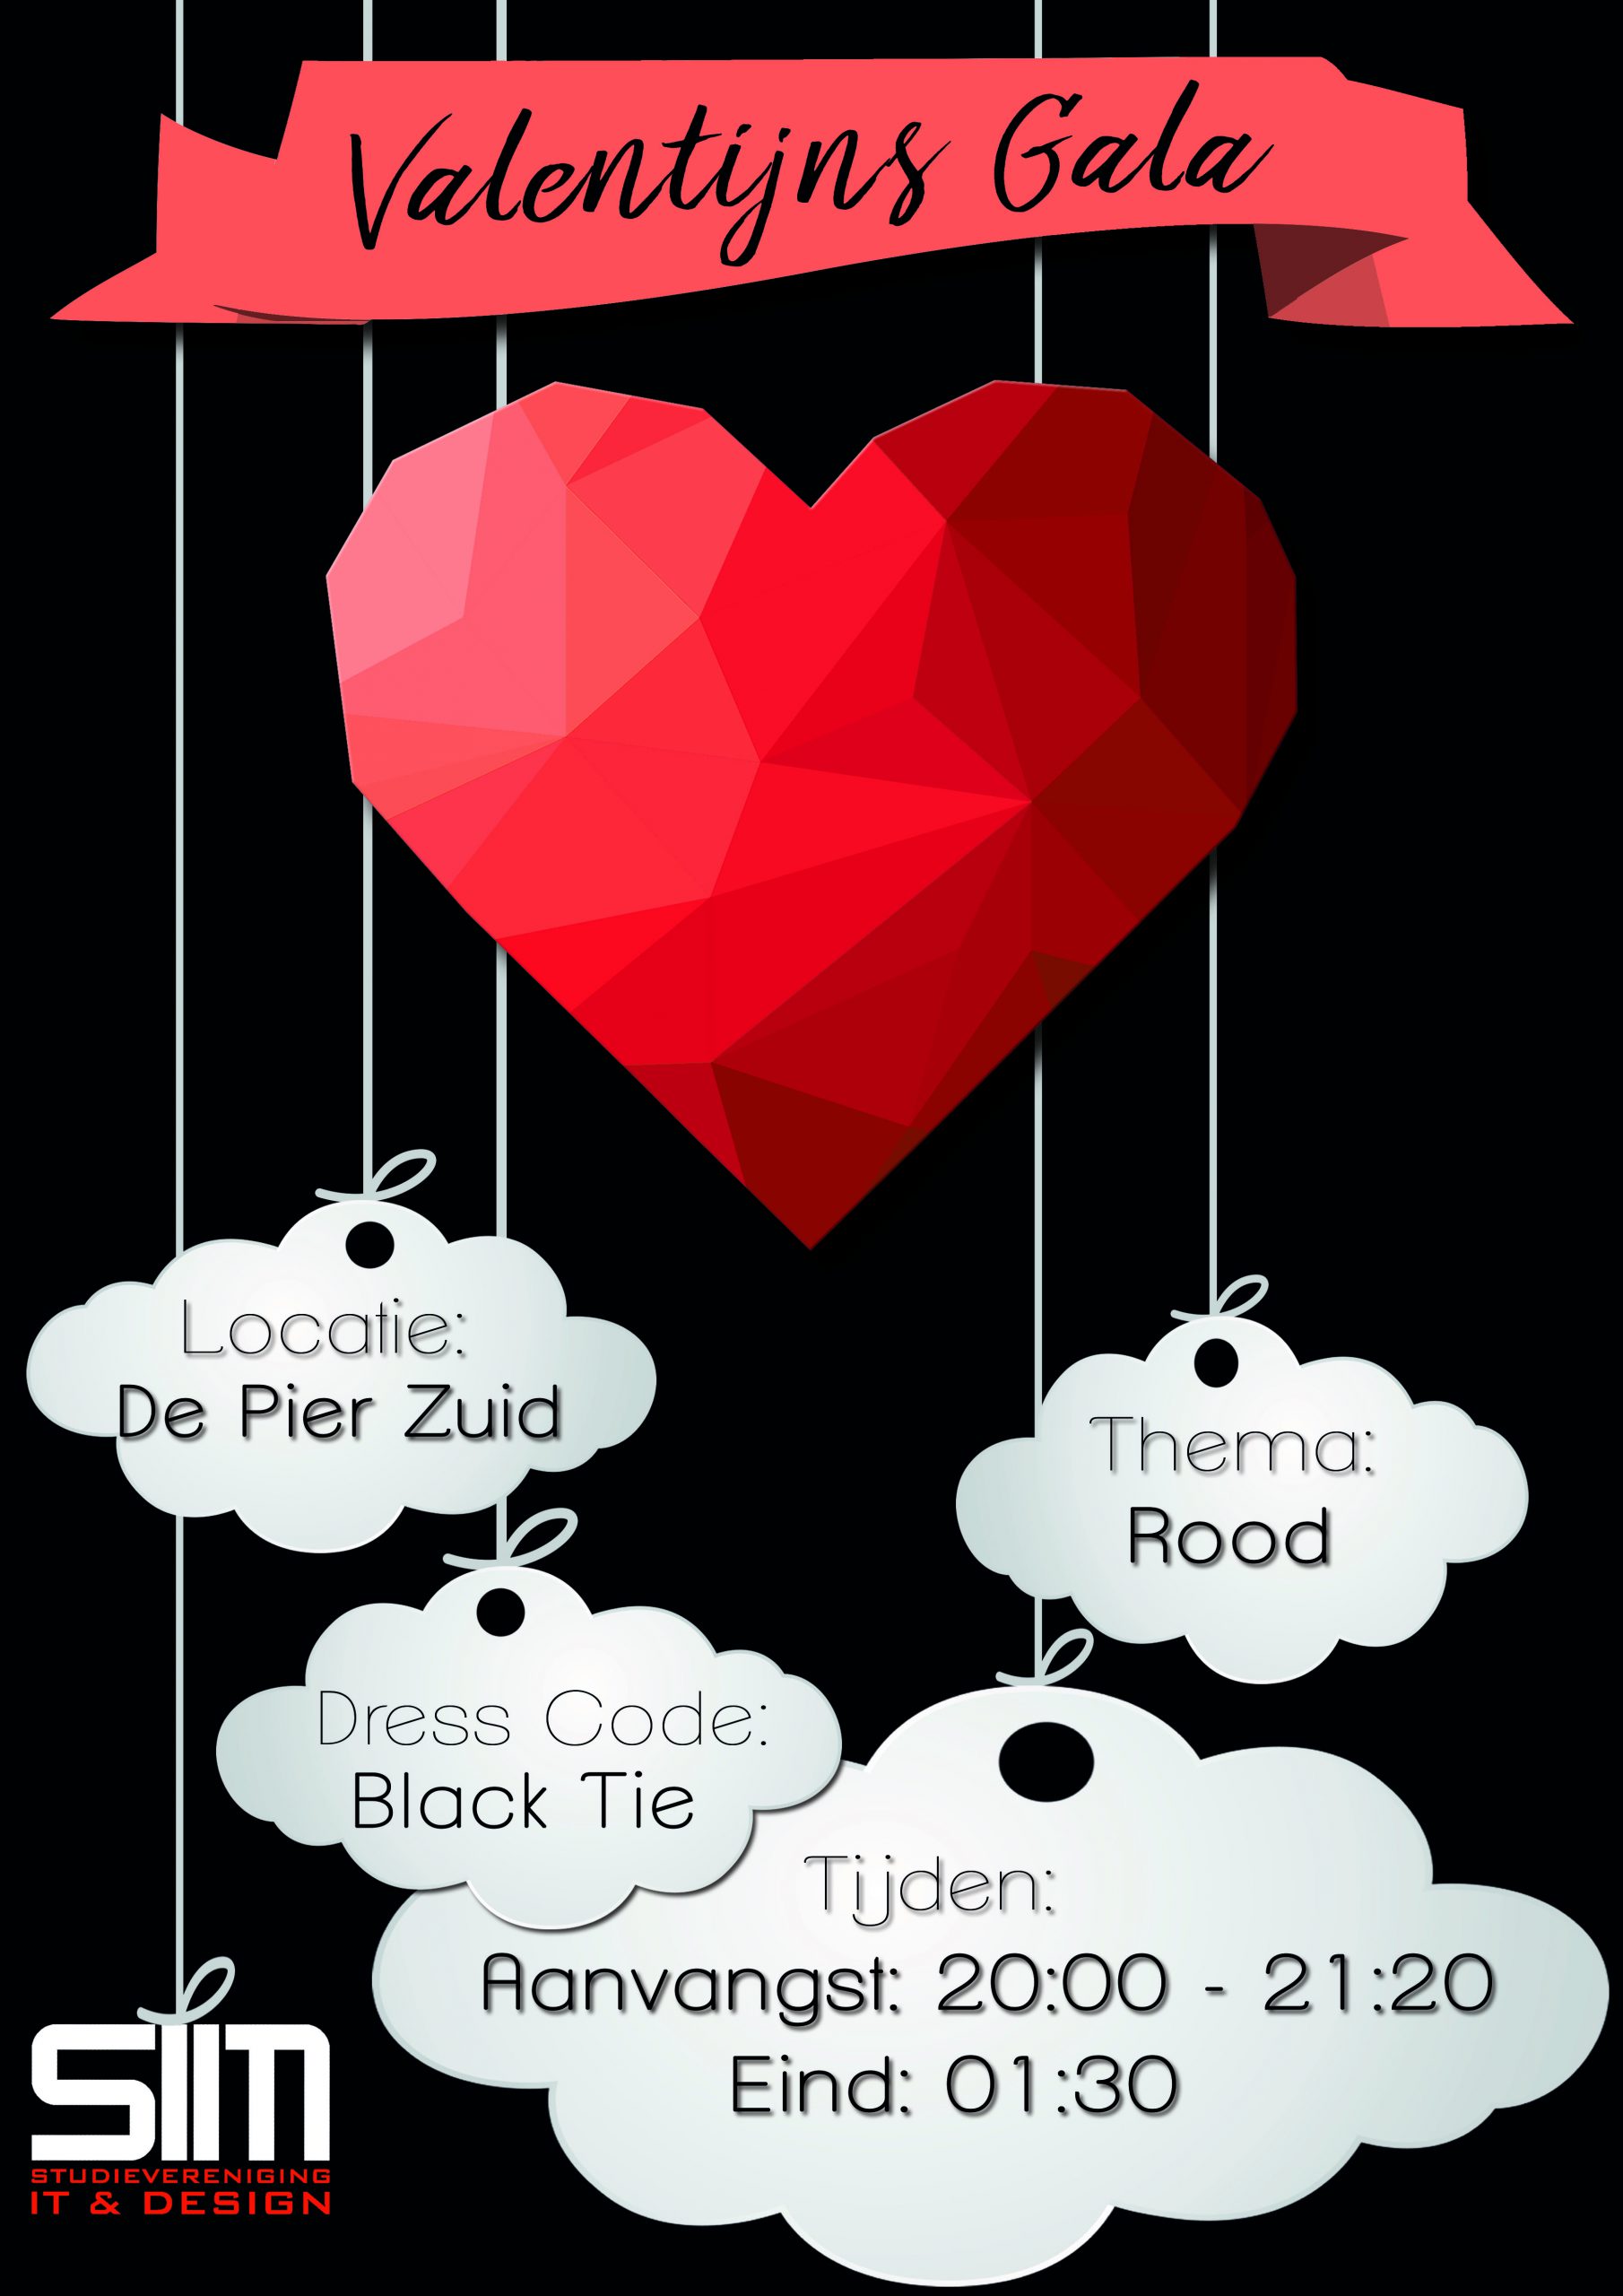 Poster design for a Valentine event.